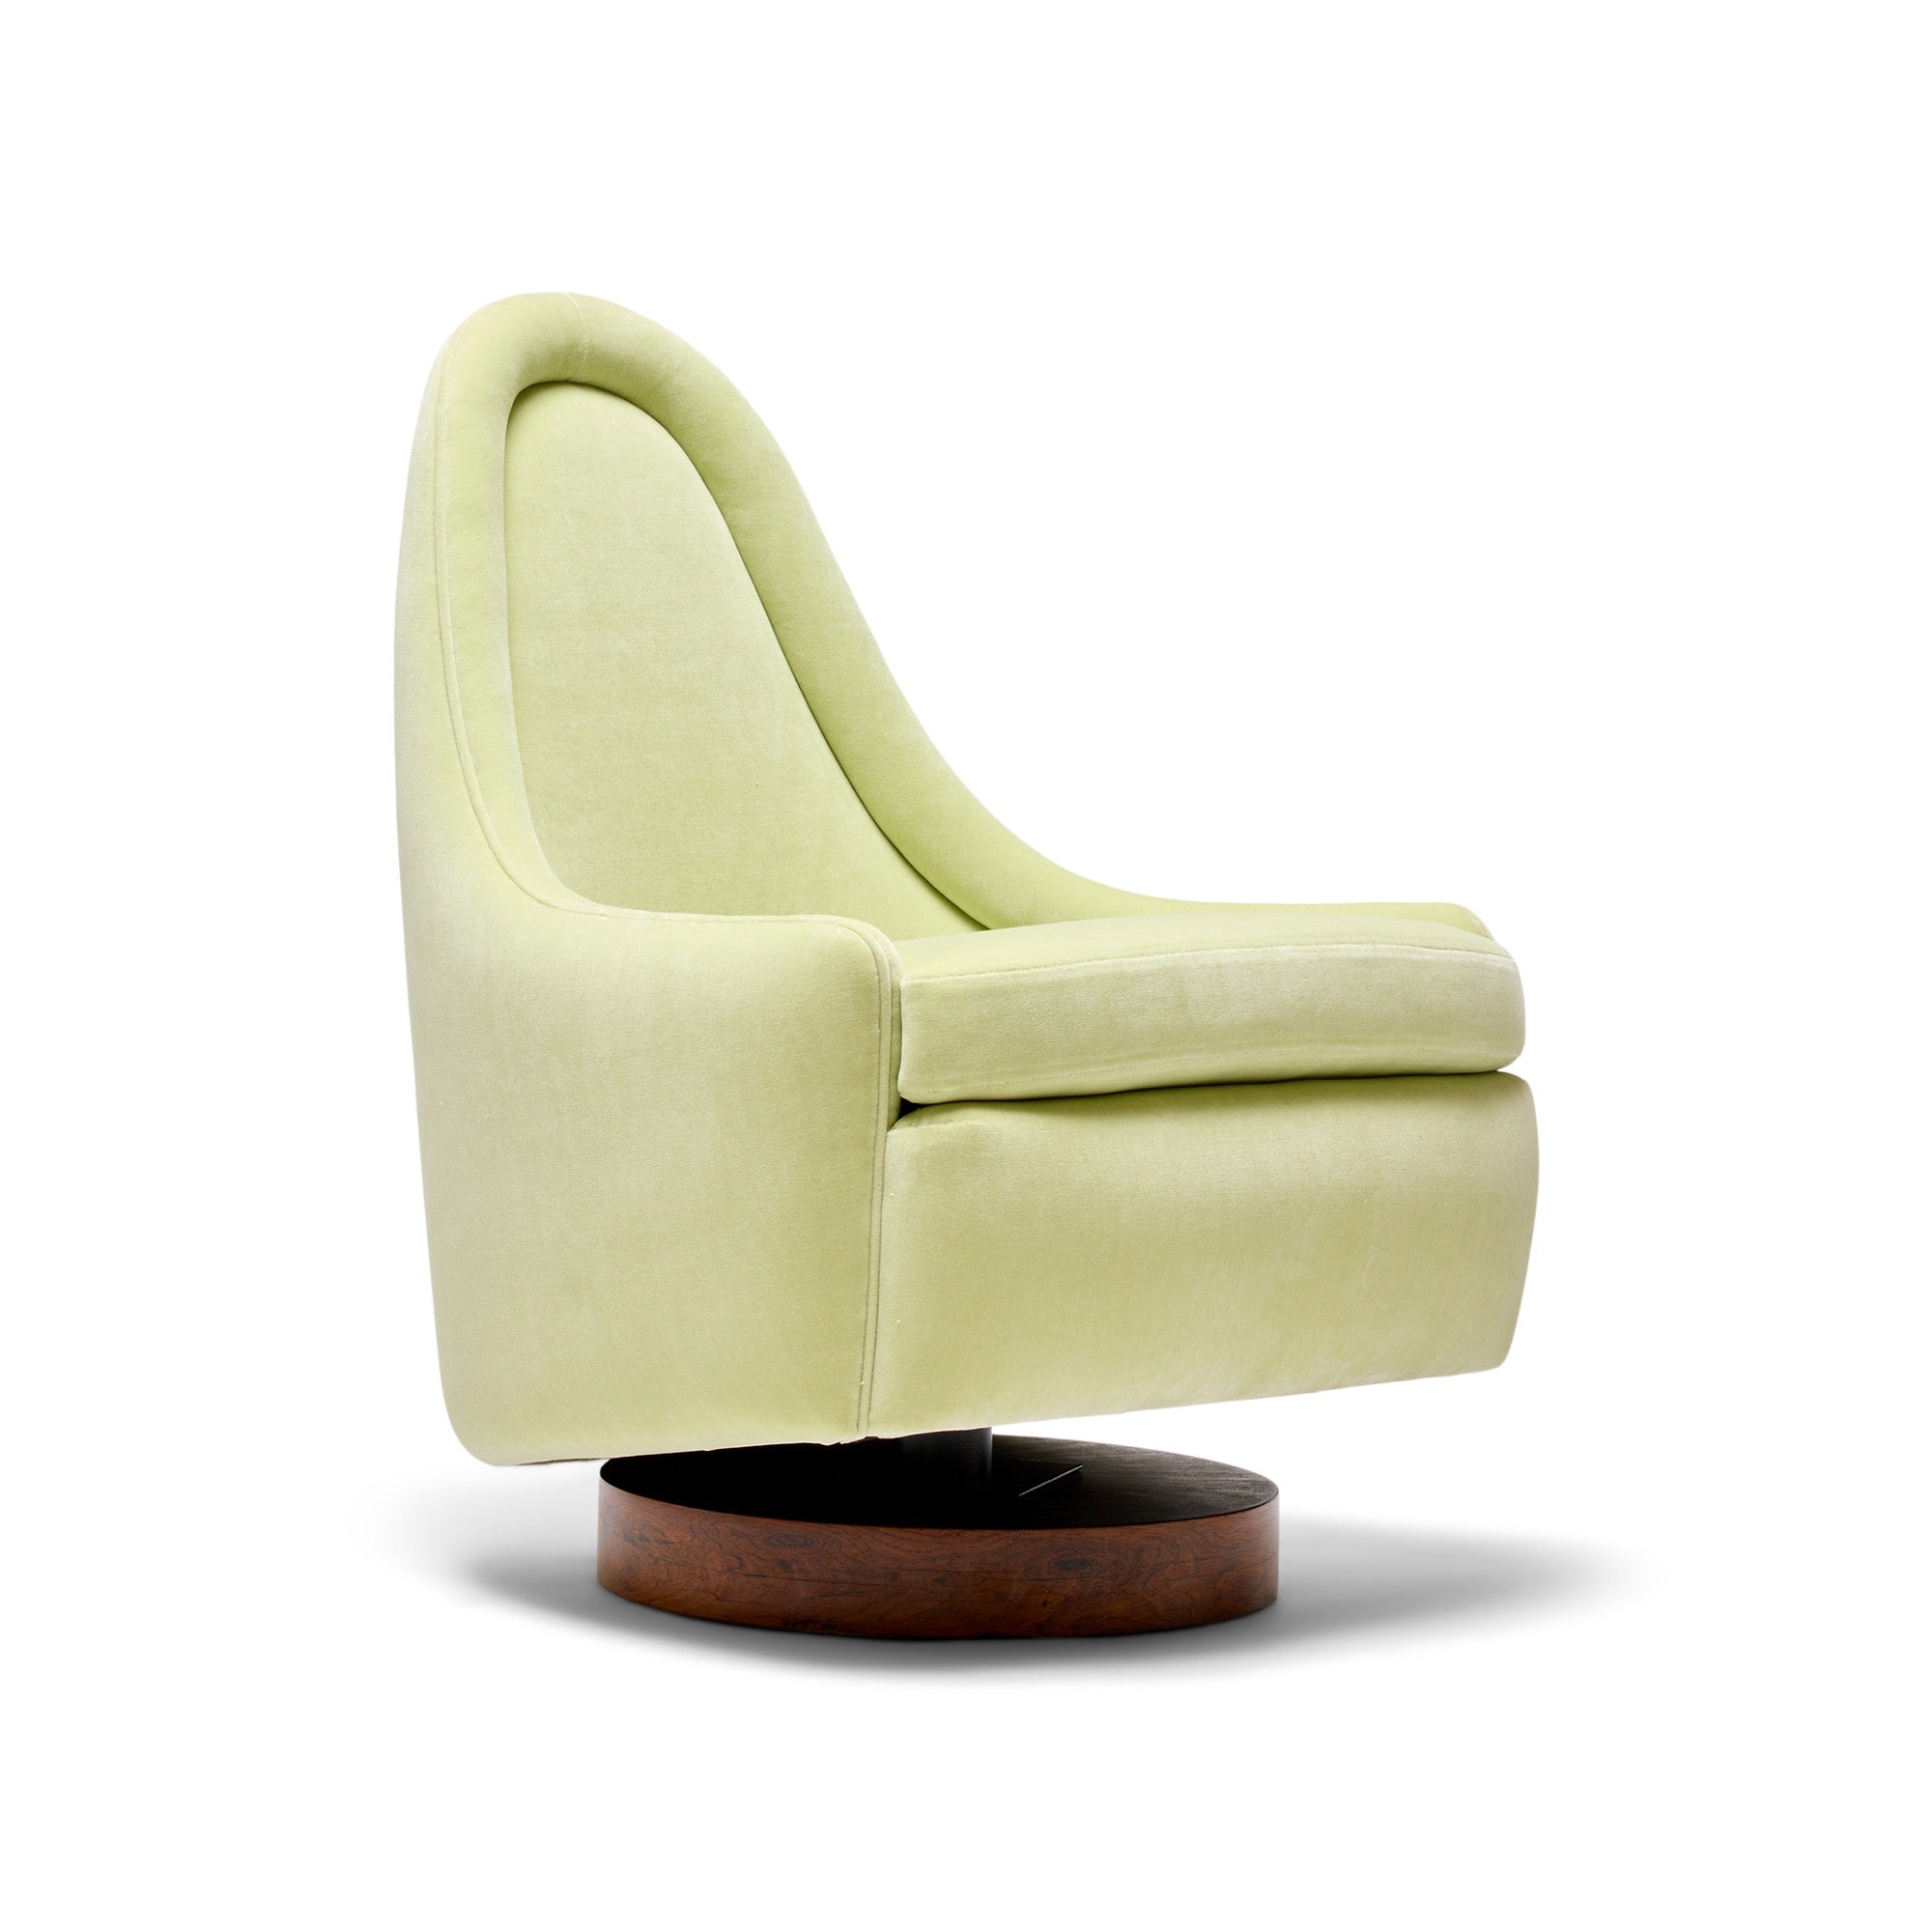 A Swivel Tilt and Rock Slipper Chair by Milo Baughman for Thayer Coggin Inc, 1960s